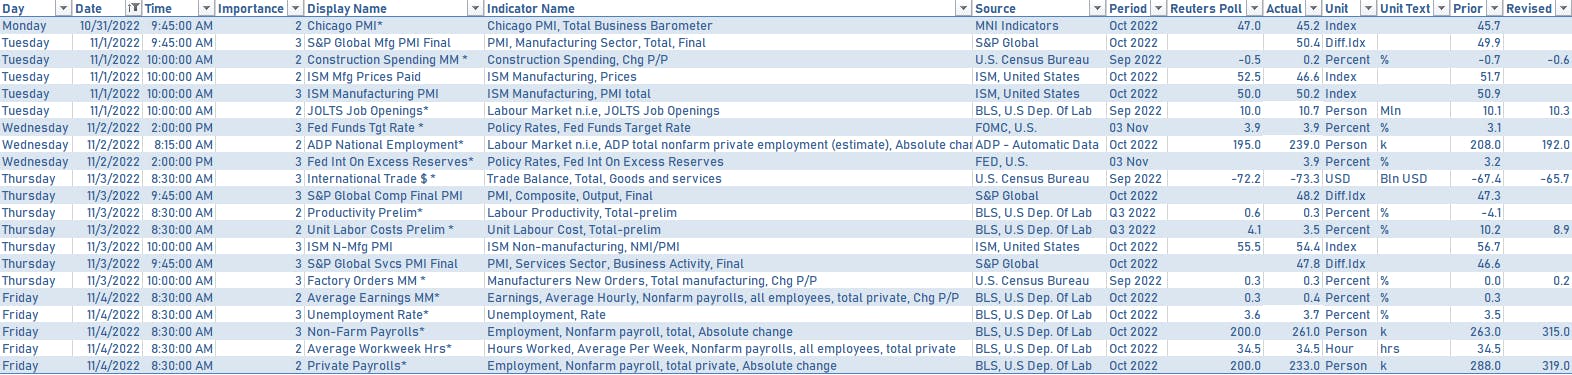 US economic data over the past week | Sources: phipost.com, Refinitiv data